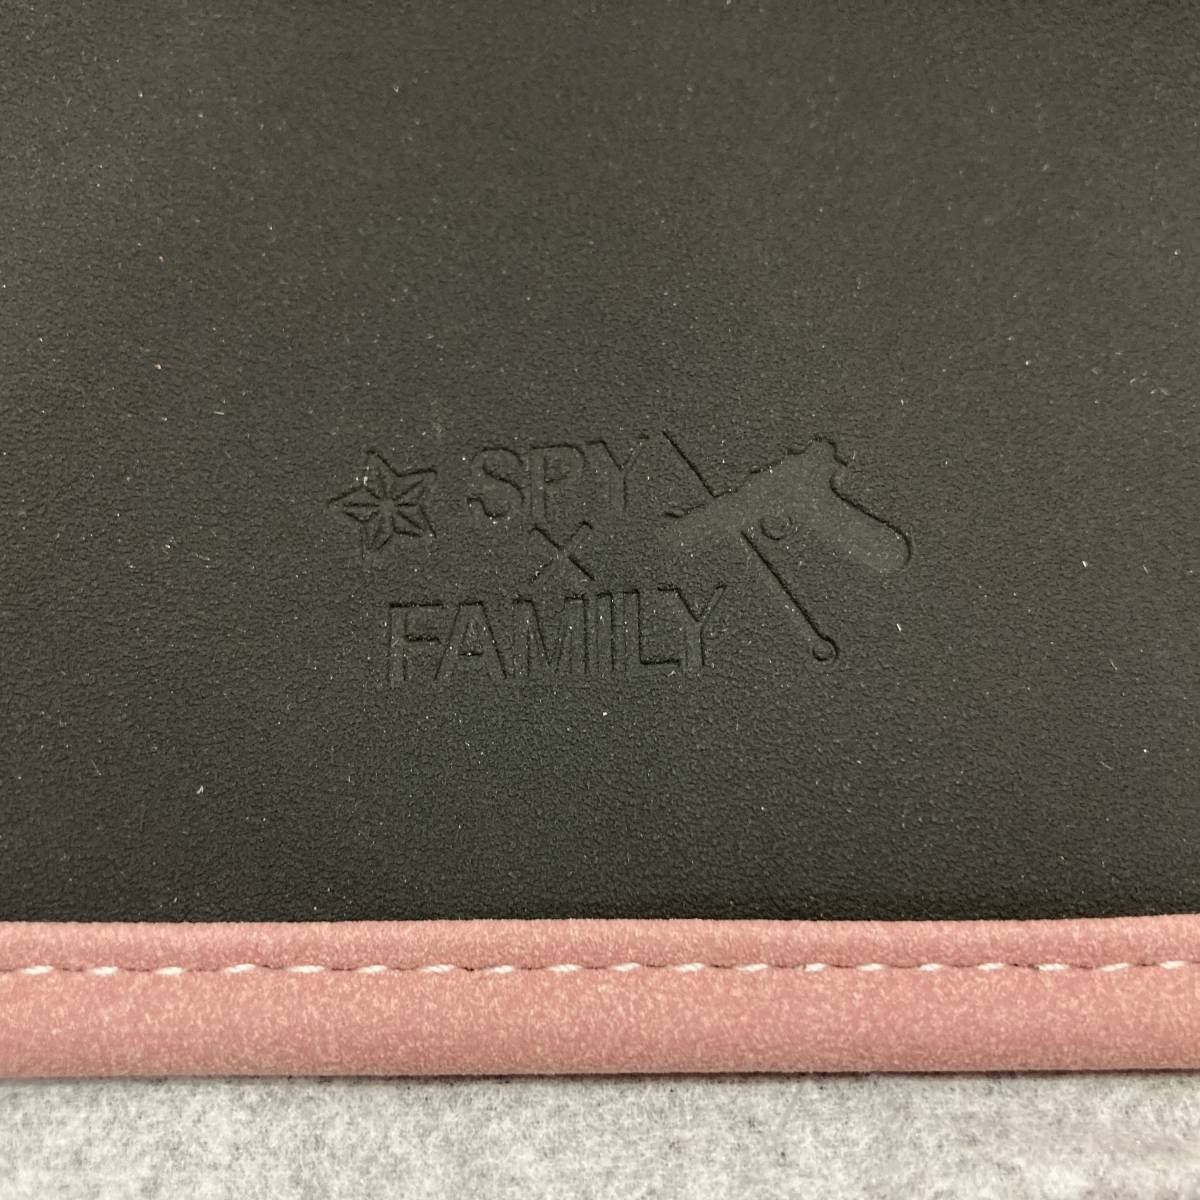 [1 jpy ~]SPY×FAMILY/ Spy Family /a-nya* four ja-/ bag [ new goods unused goods ]